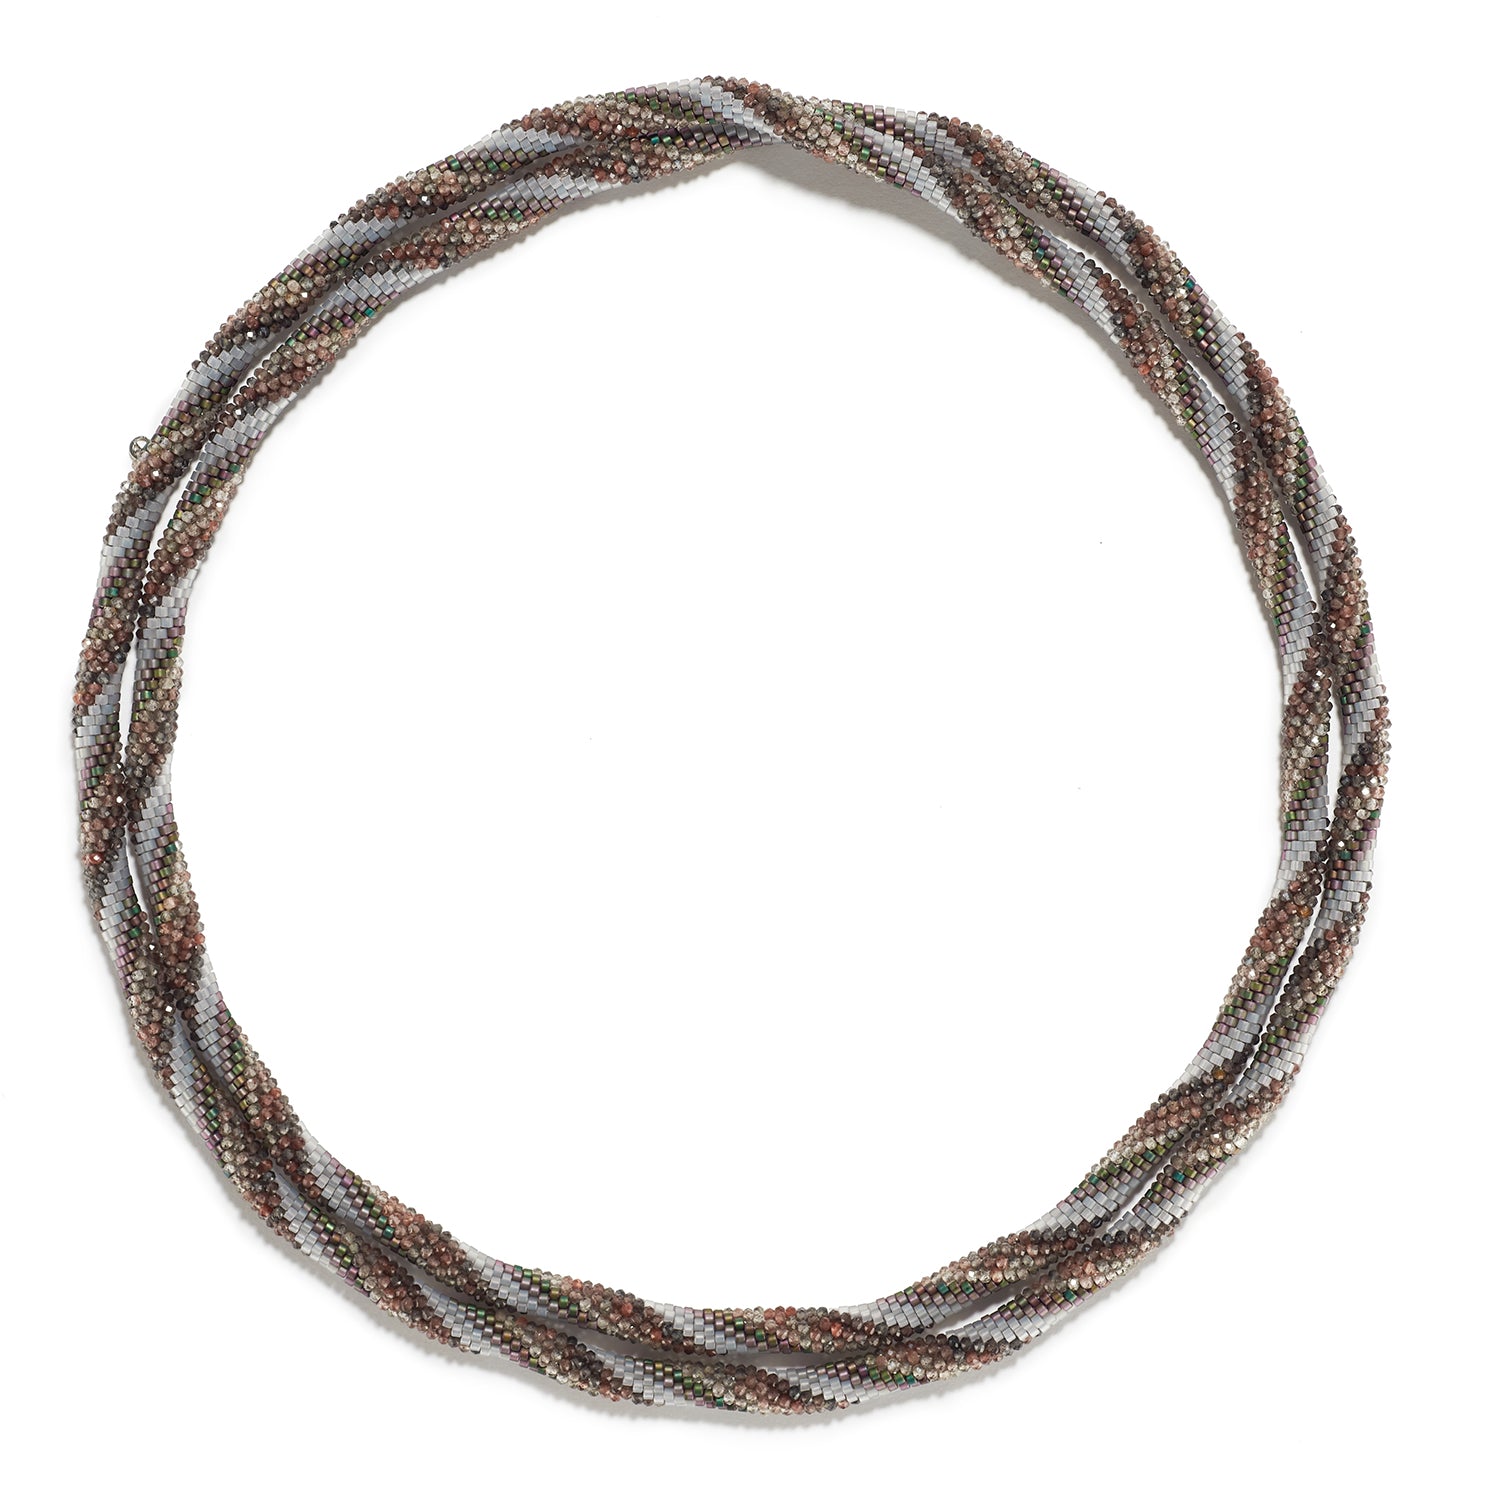 Spiral Spinel Necklace